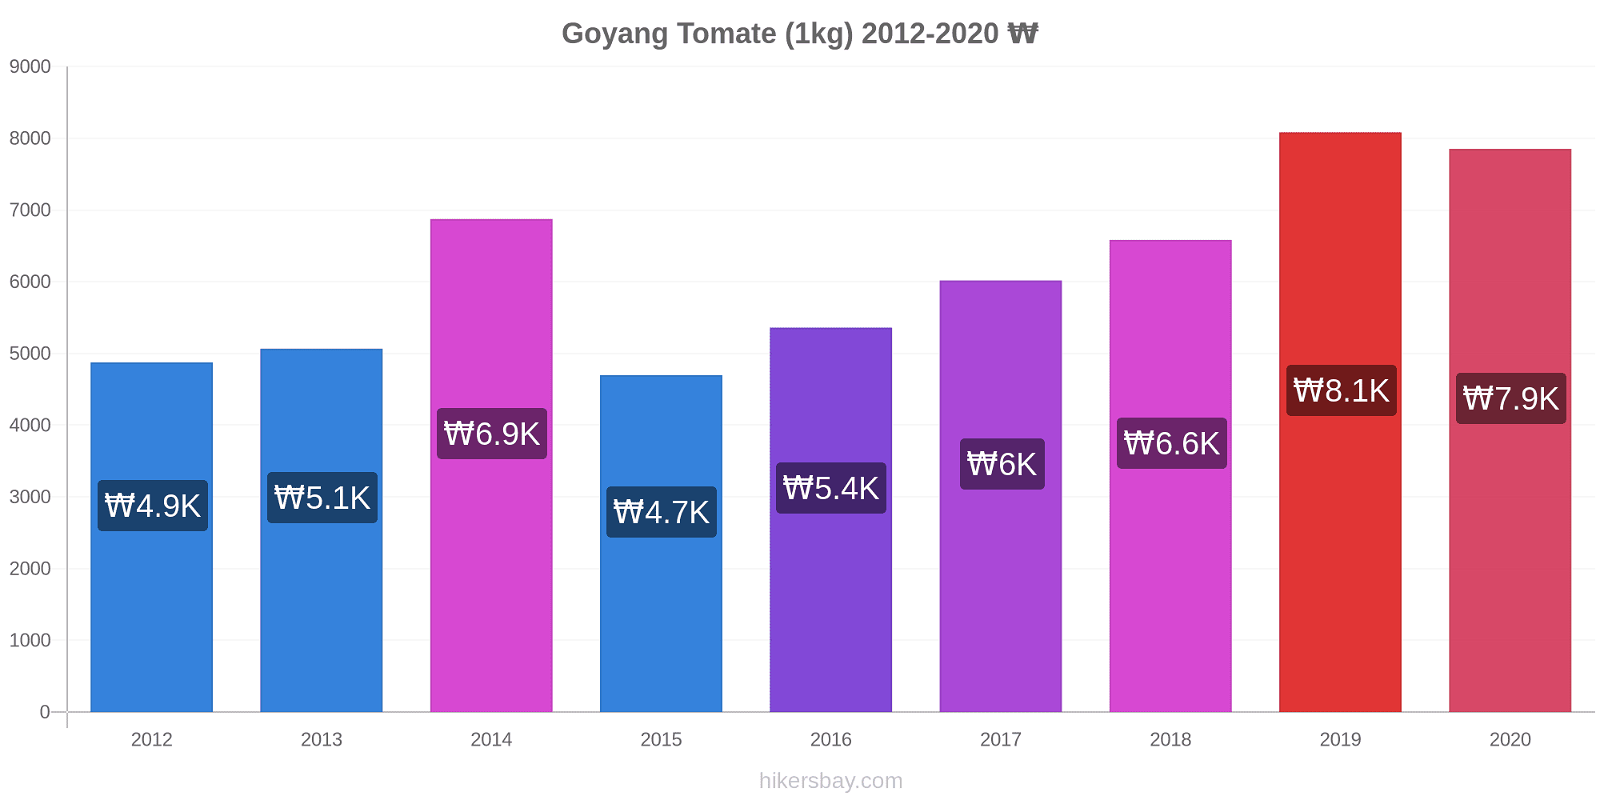 Goyang changements de prix Tomate (1kg) hikersbay.com